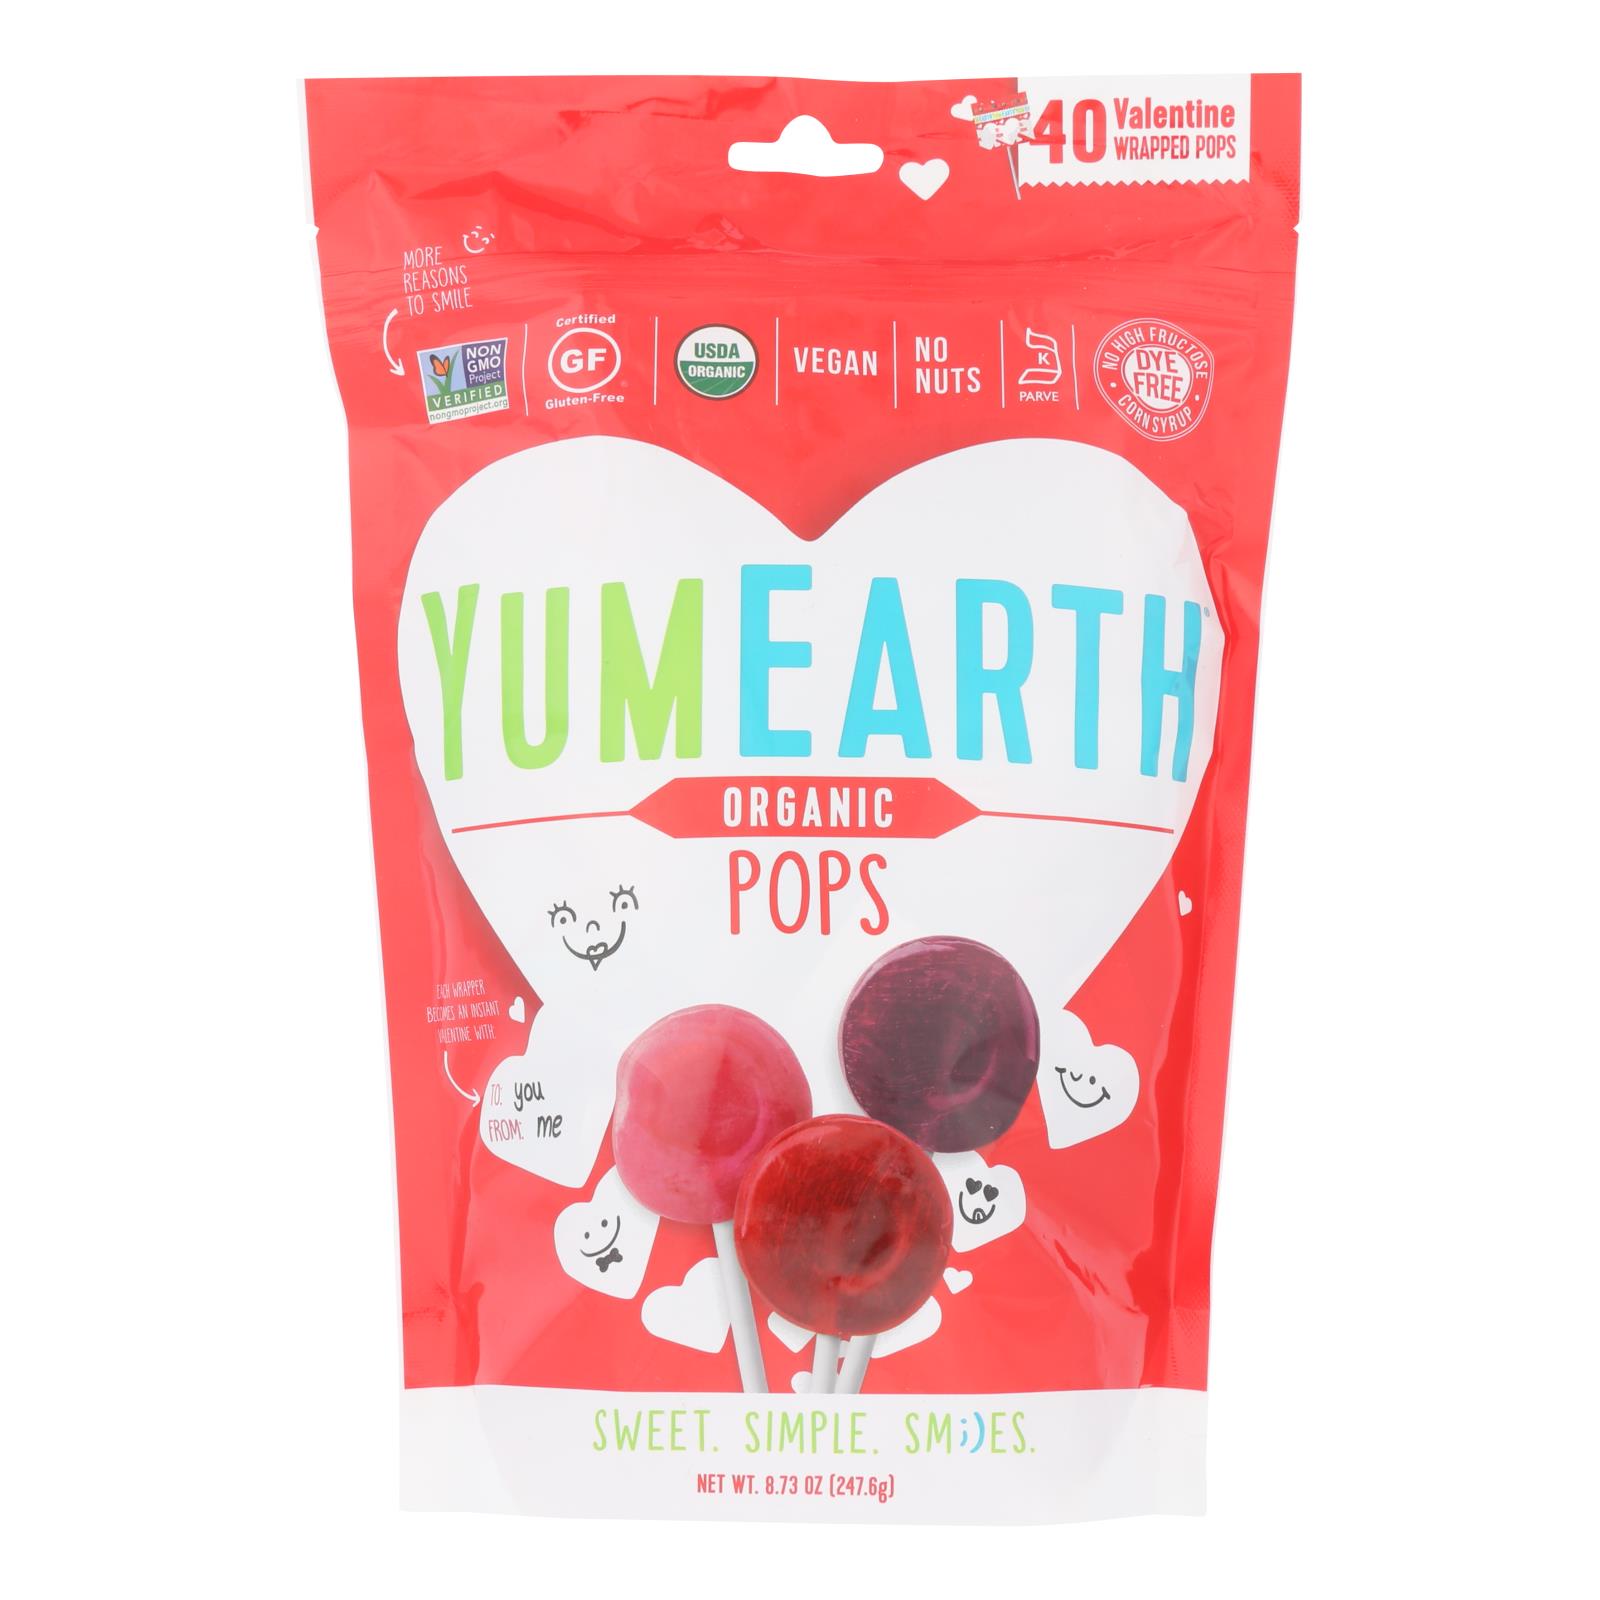 Yumearth Organics - Fruit Pops Valentine - 18개 묶음상품 - 8.73 OZ